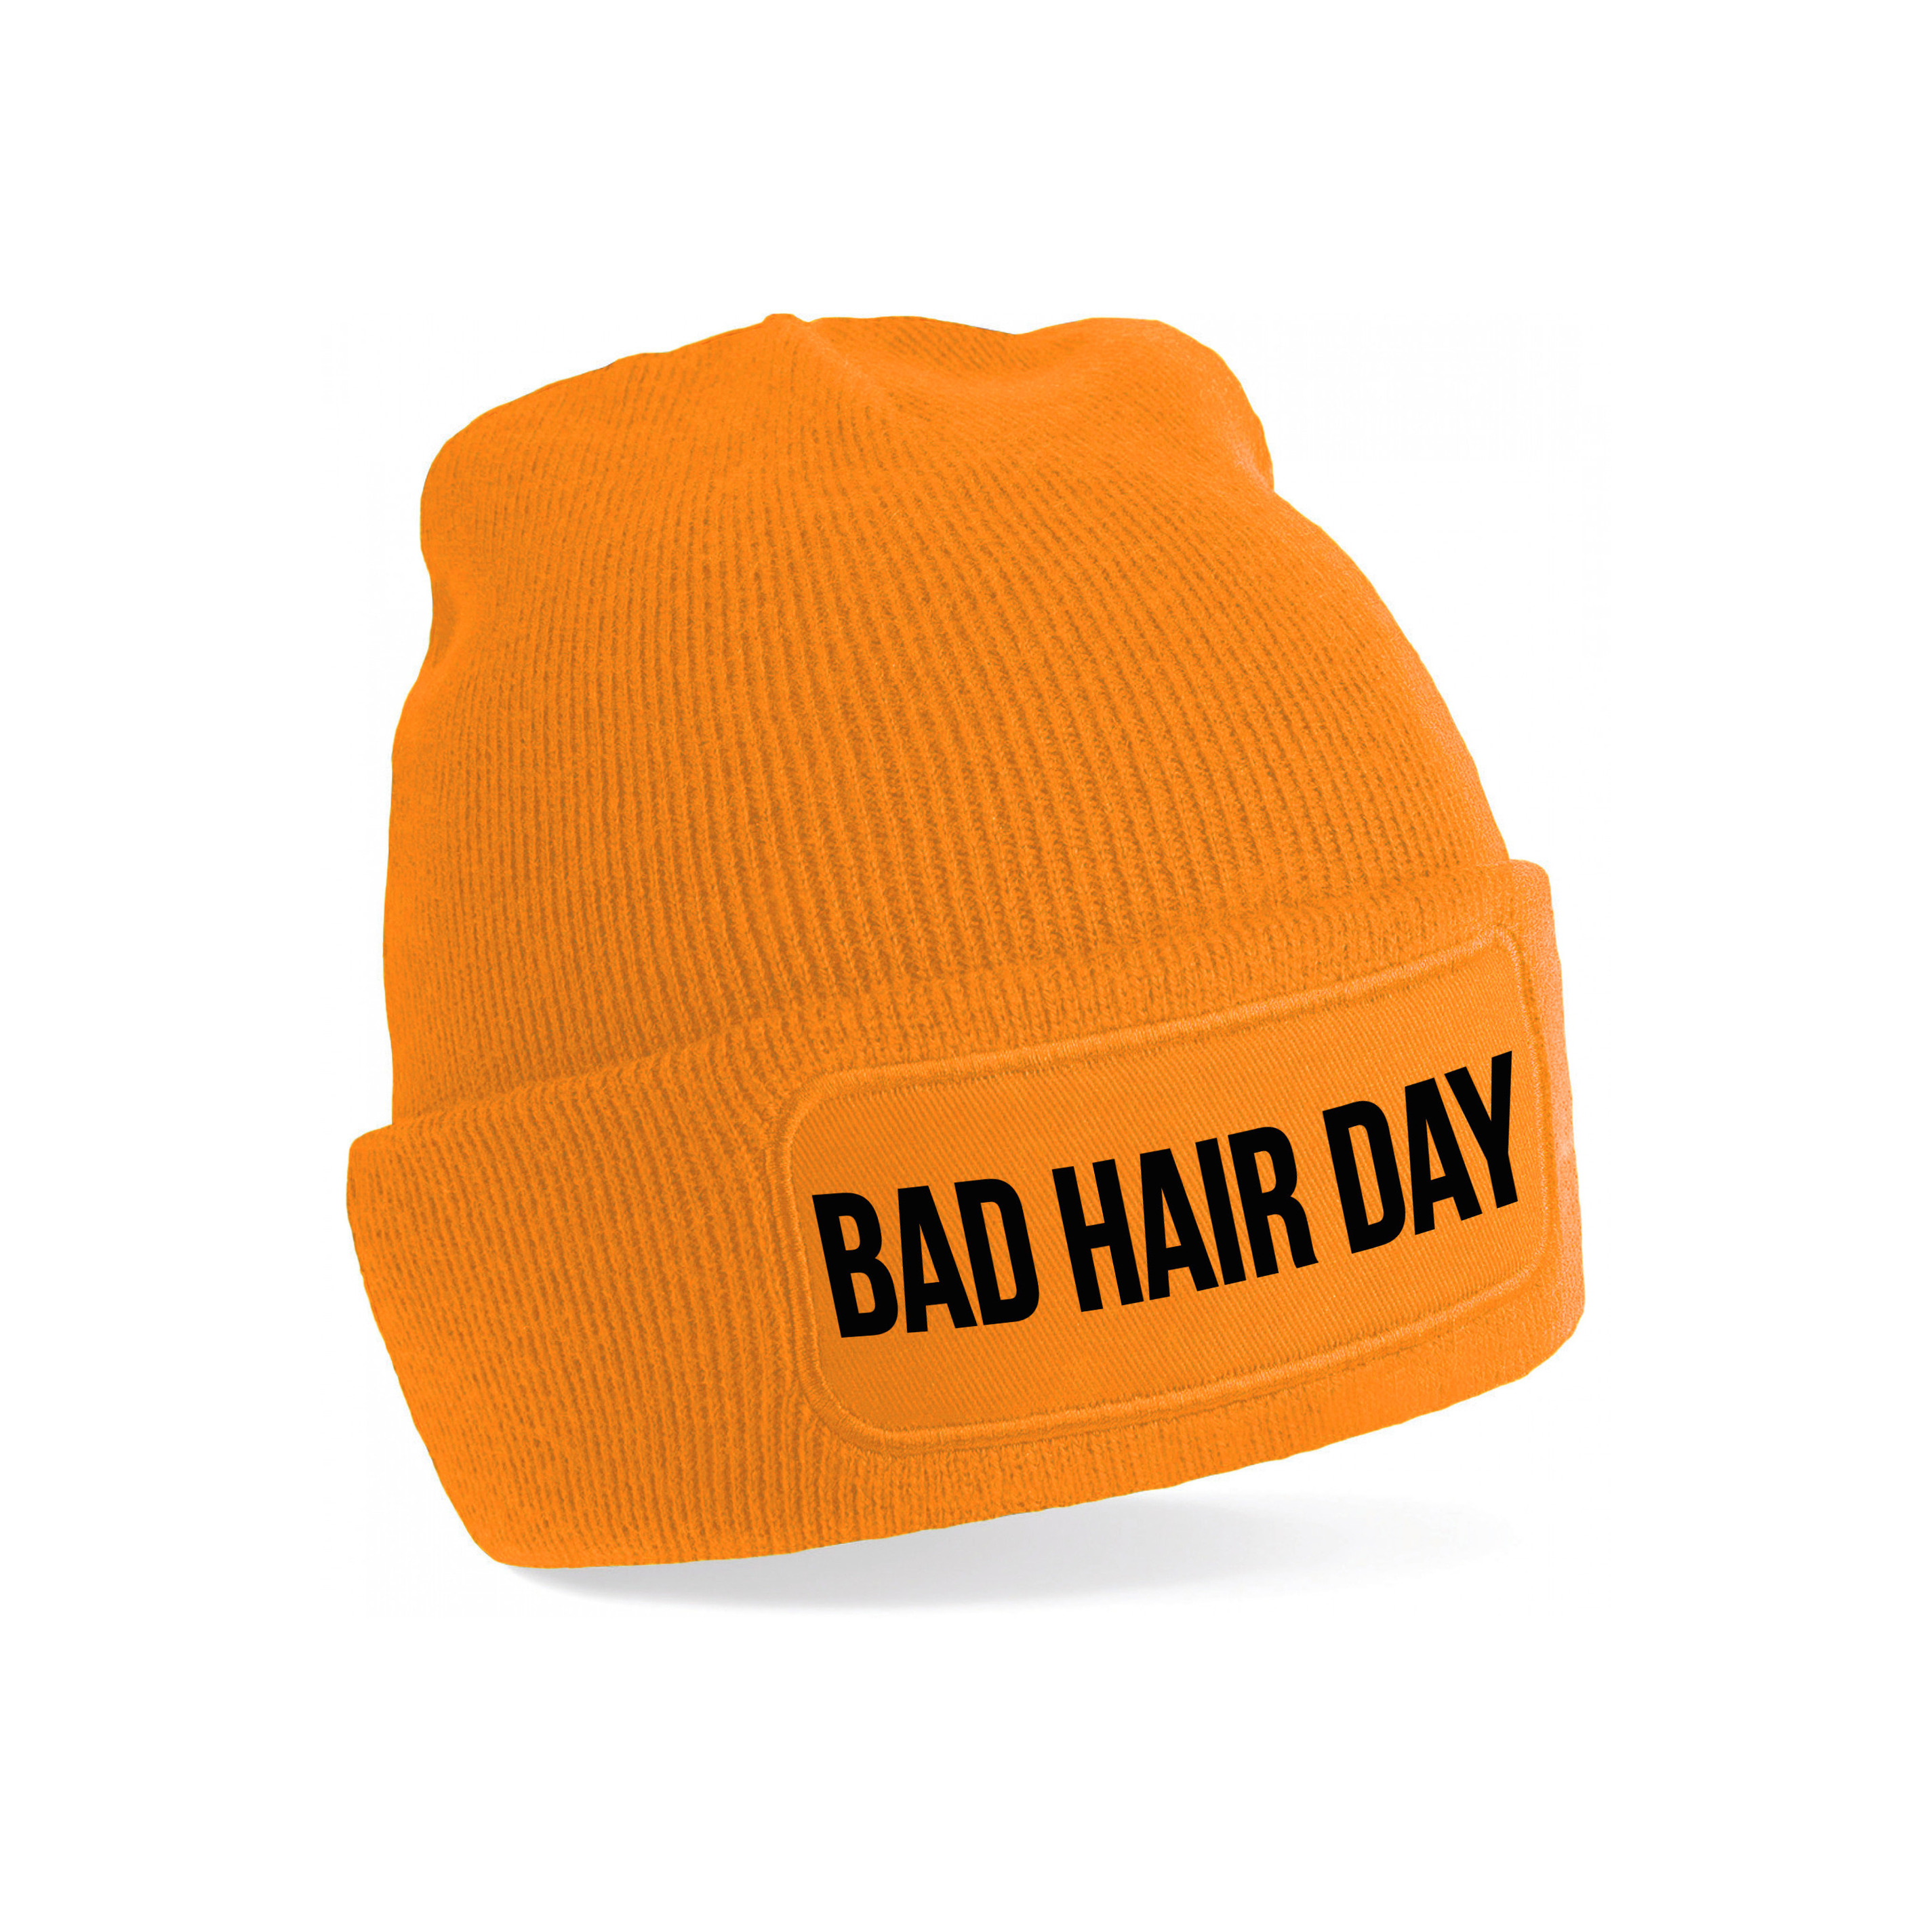 Bad hair day muts unisex one size Oranje